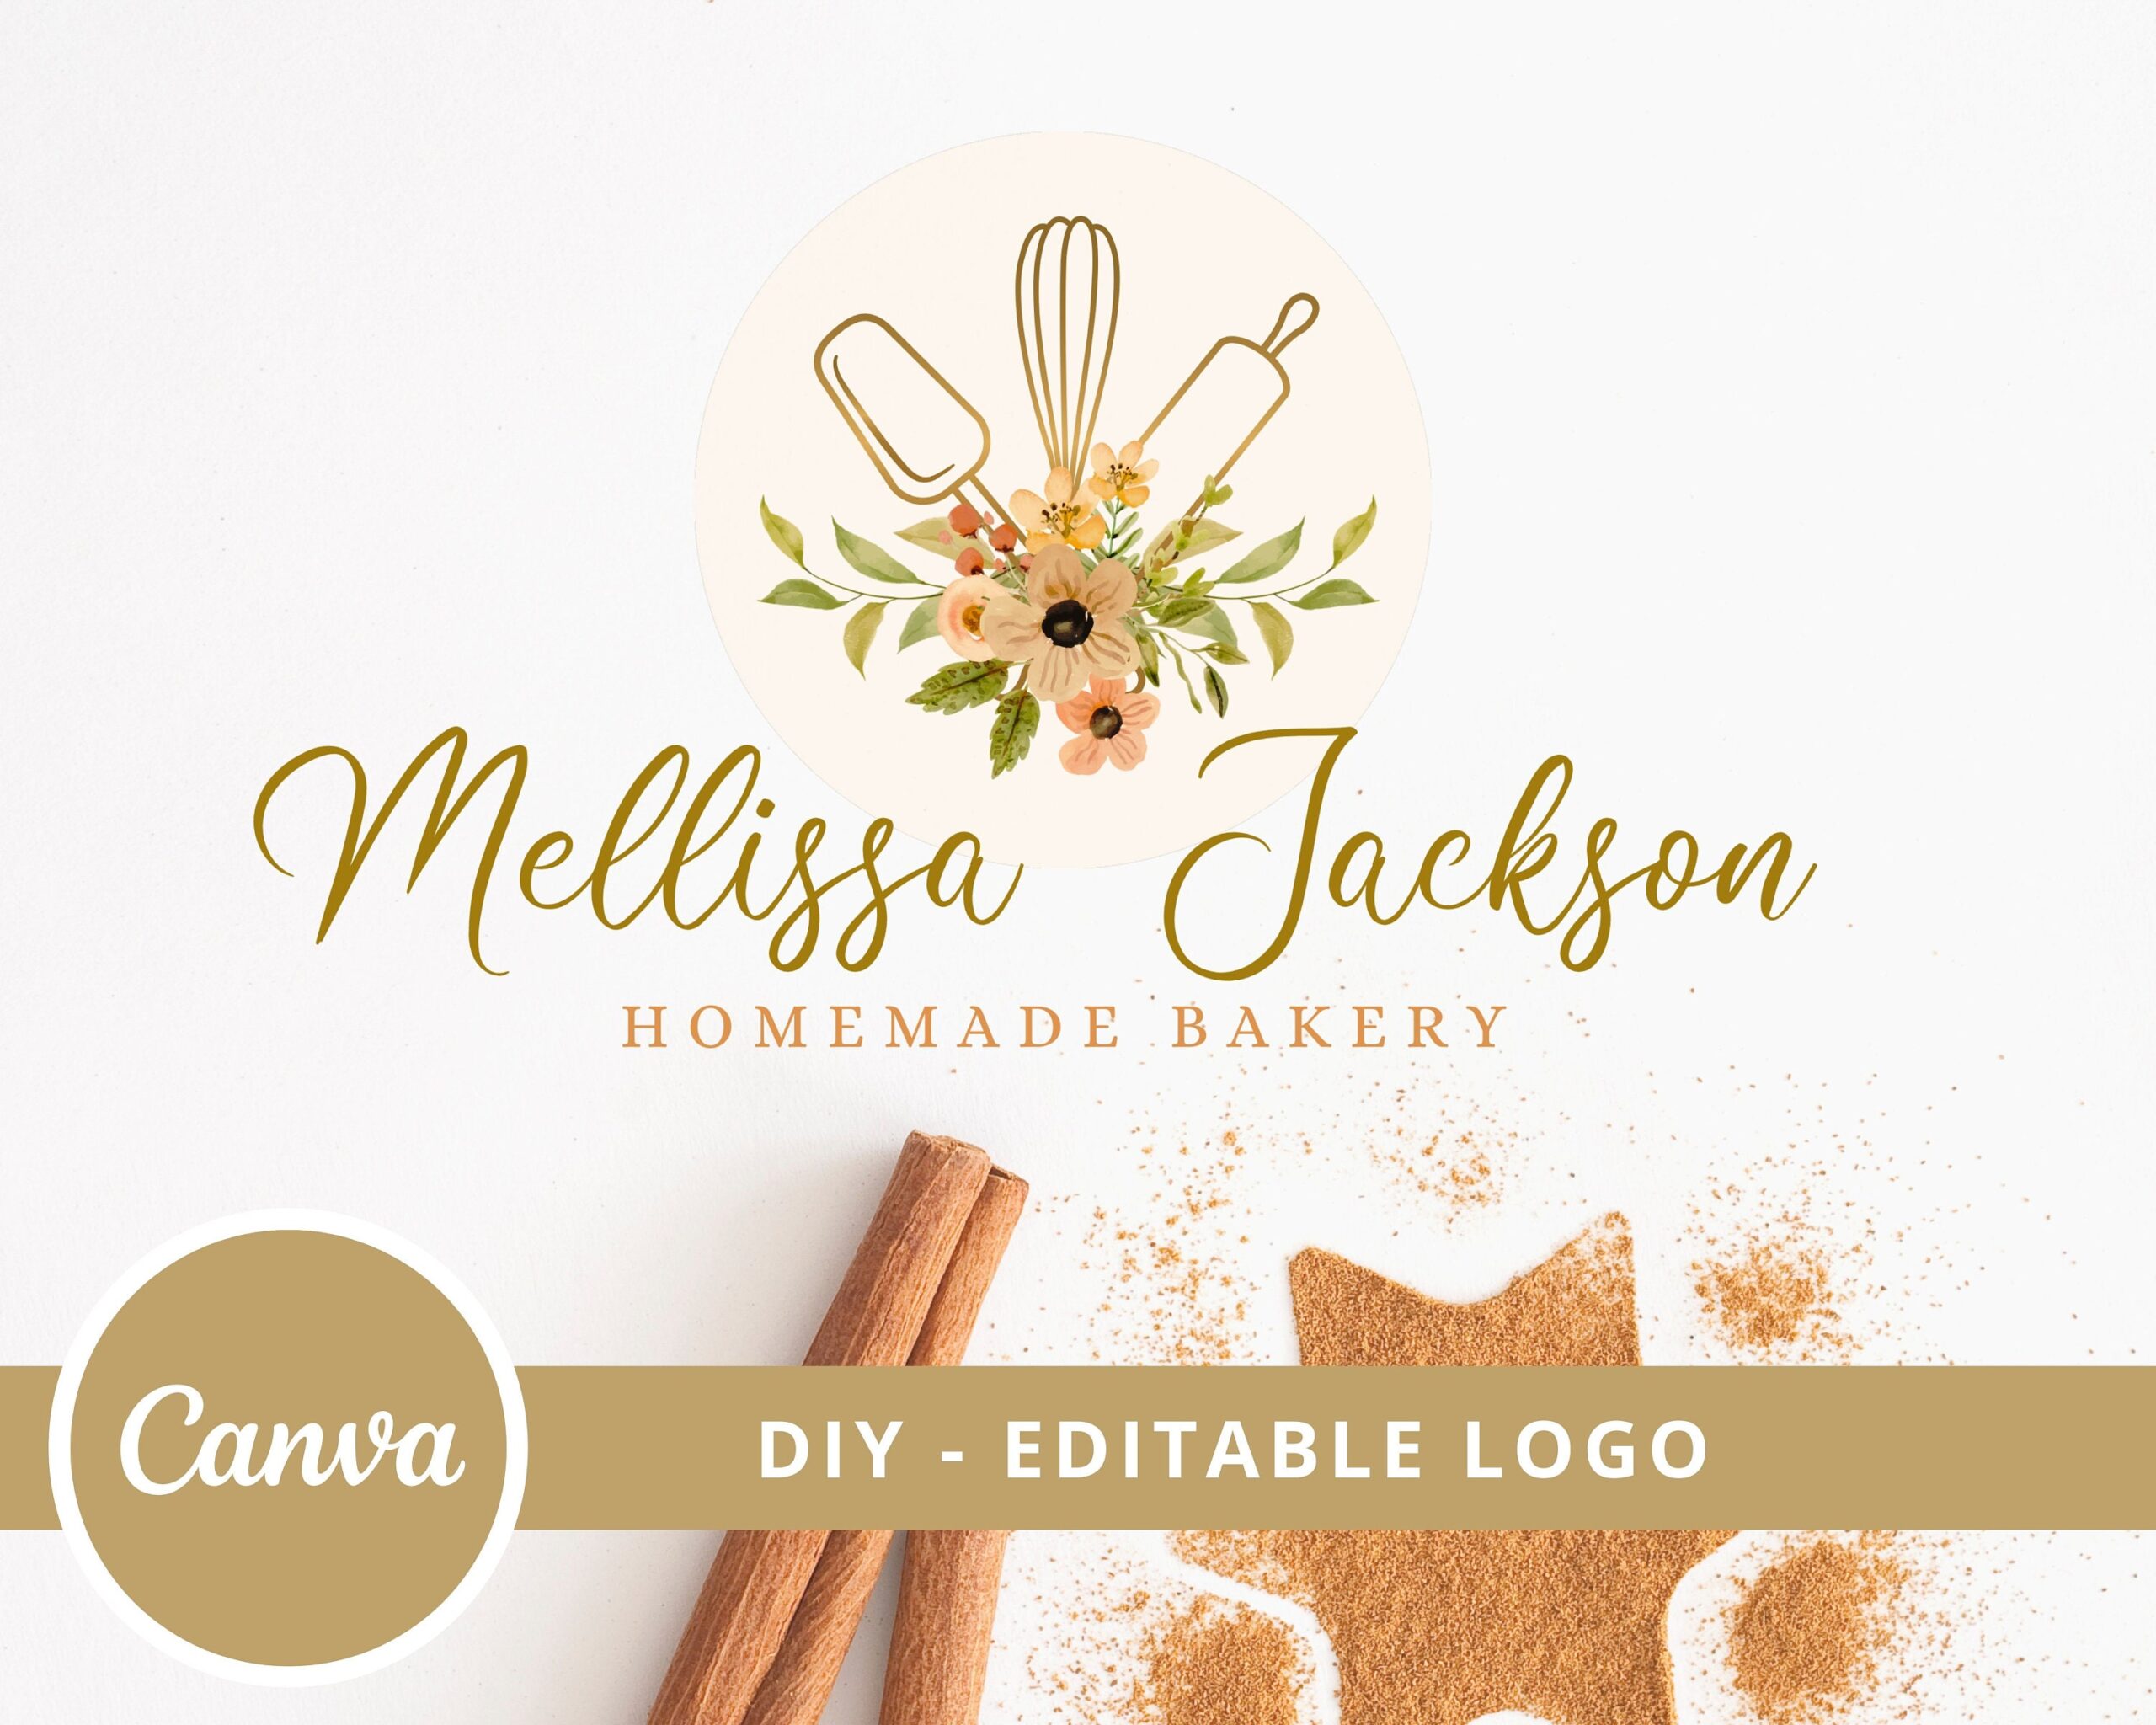 DIY Vintage Bakery Logo Design, Canva Editable Template, Watercolor Floral Logo Design, Cookie Logo, Editable Logo Templates, Instant Access